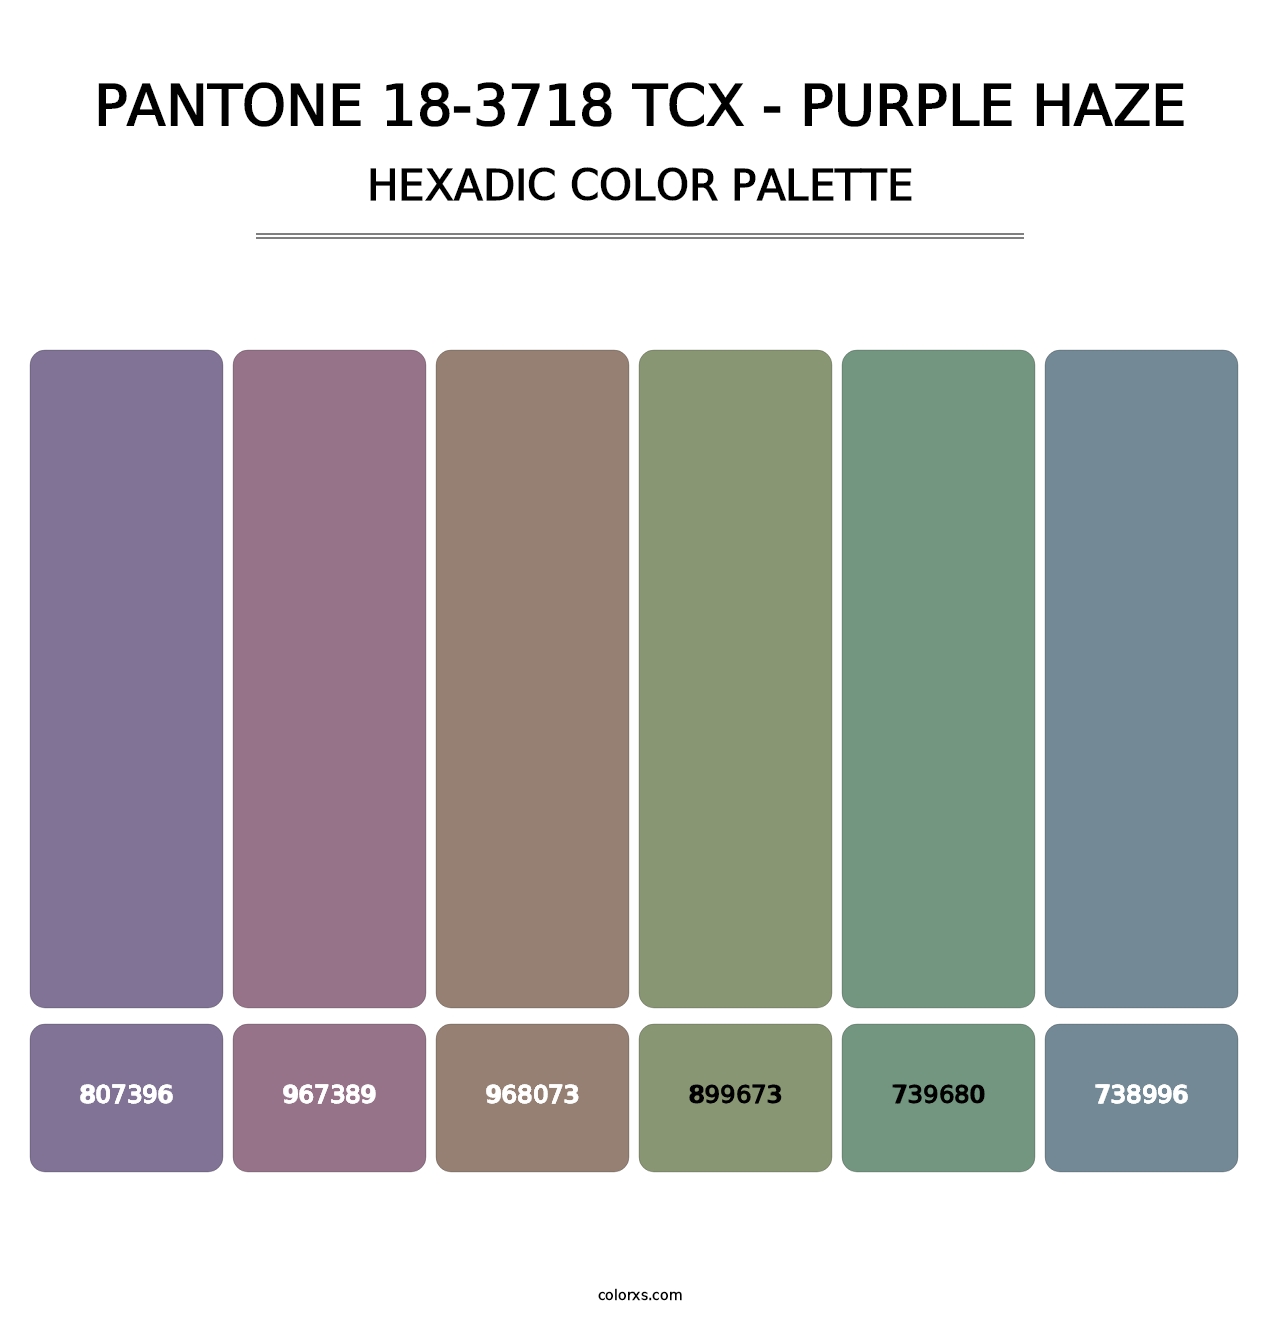 PANTONE 18-3718 TCX - Purple Haze - Hexadic Color Palette